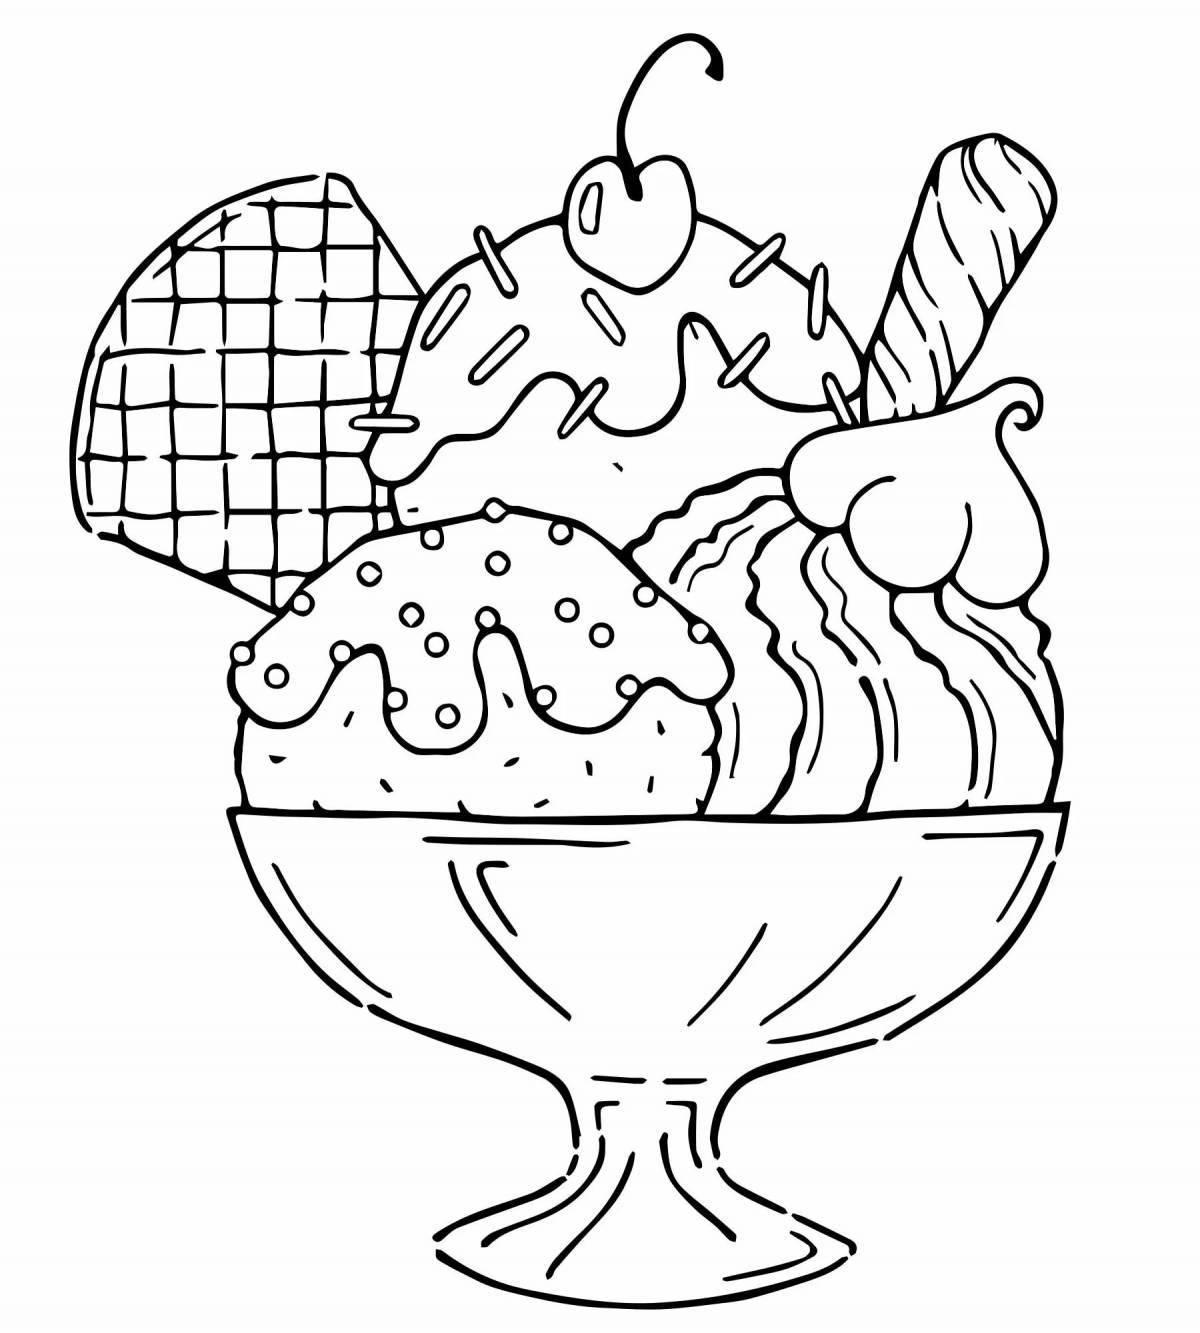 Ice cream for kids #3